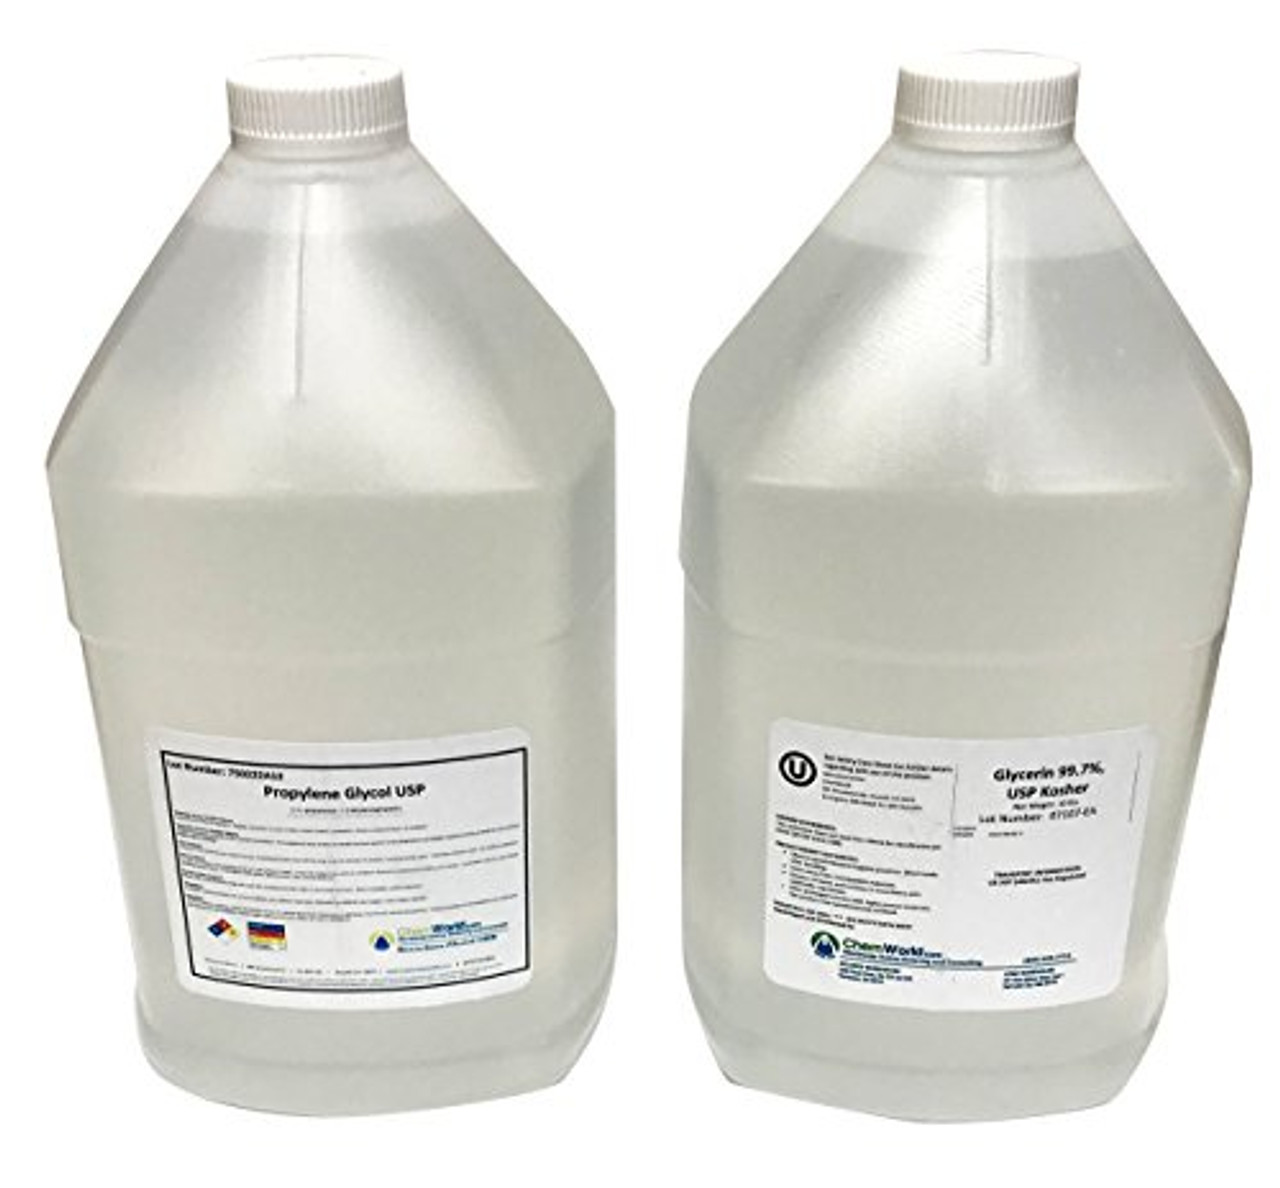 Chemworld Glycerin USP & Propylene Glycol USP - 1 Gallon of Each